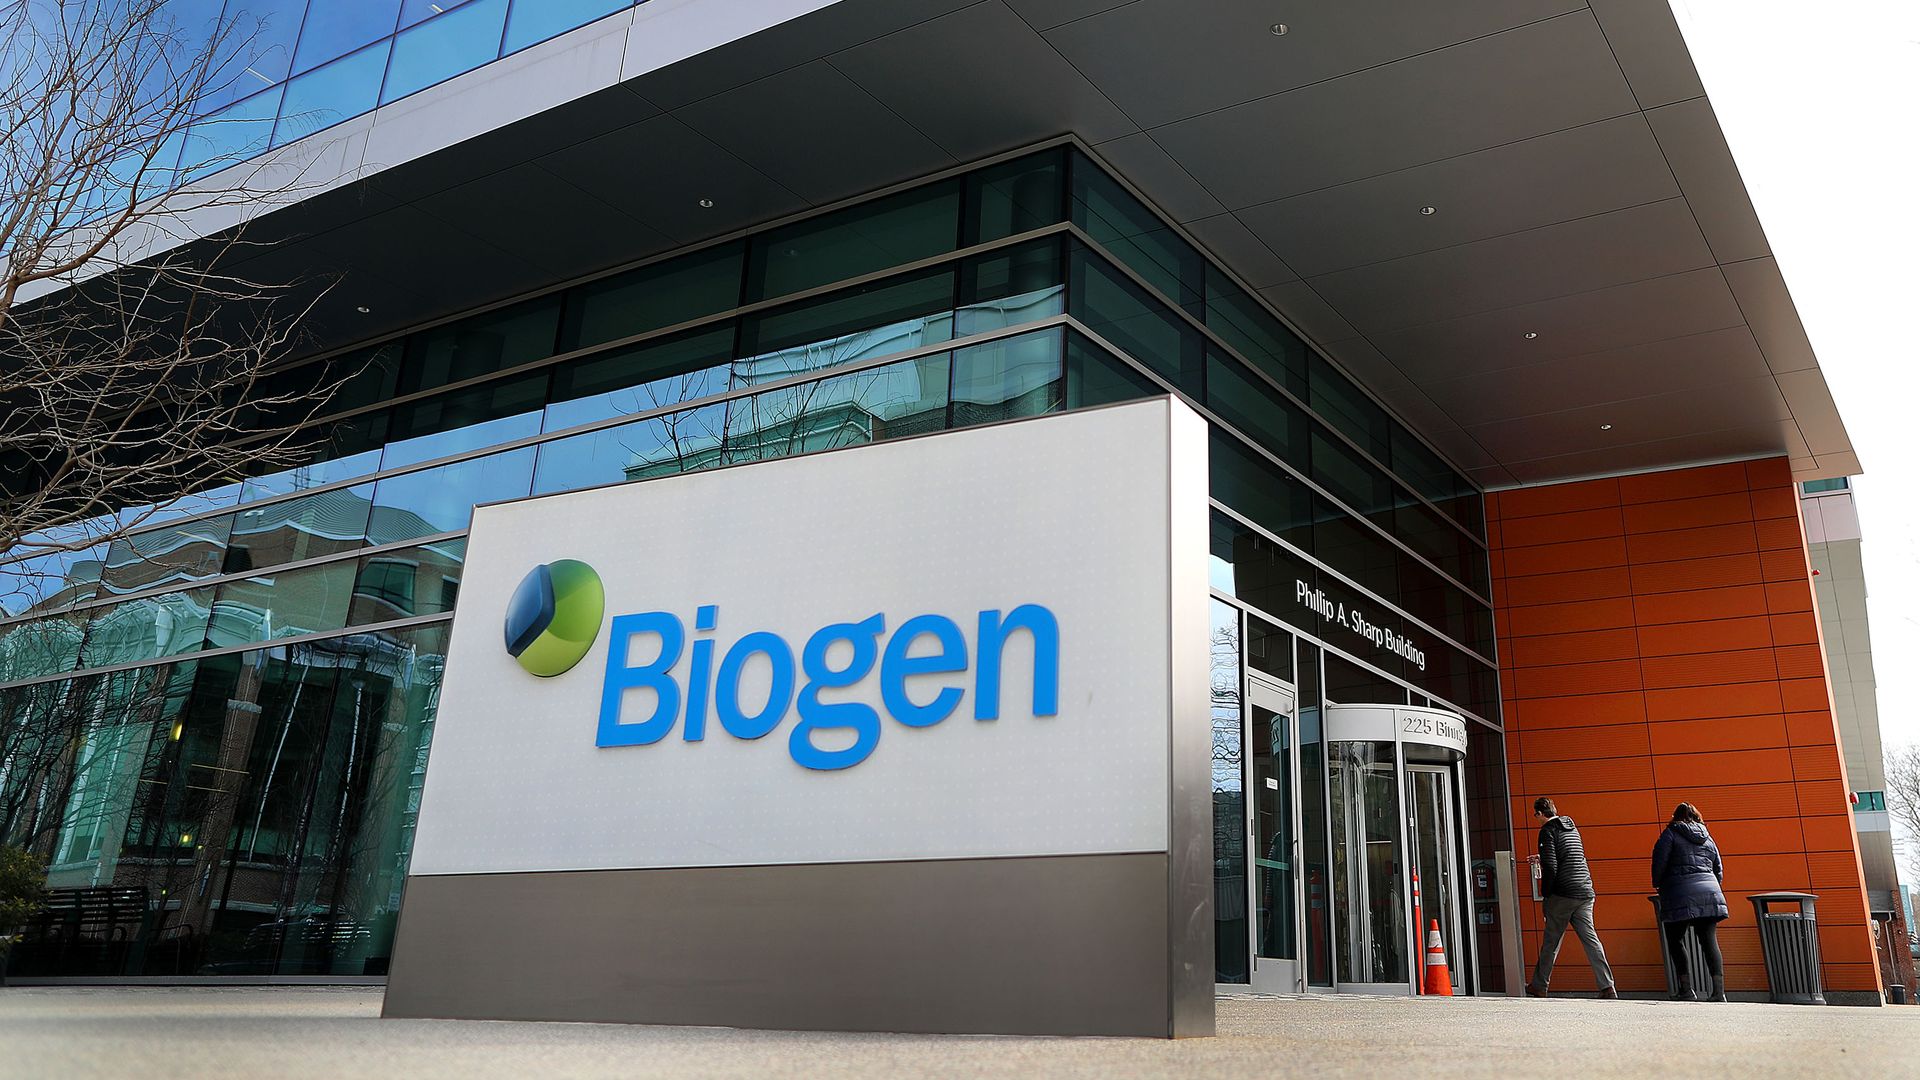 The Biogen headquarters in Massachusetts.